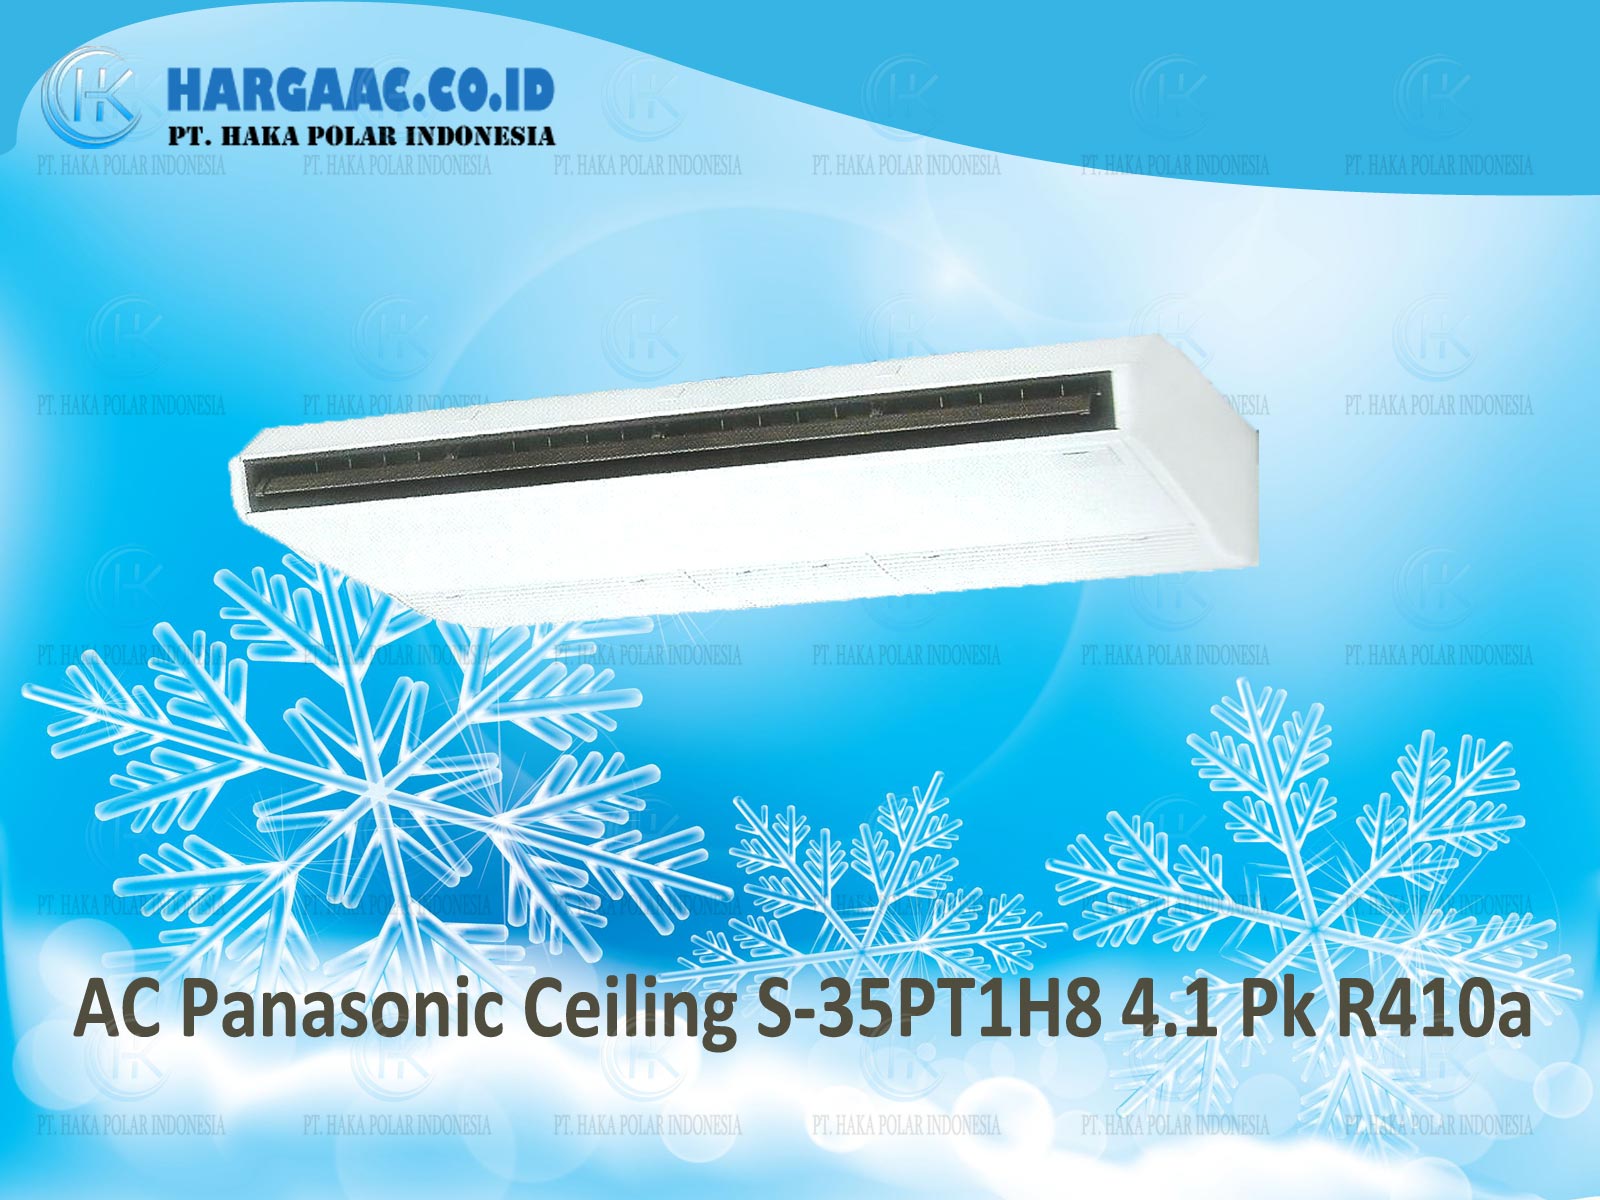 AC Panasonic Ceiling S-35PT1H8 3 Phase 4.1 PK R410a